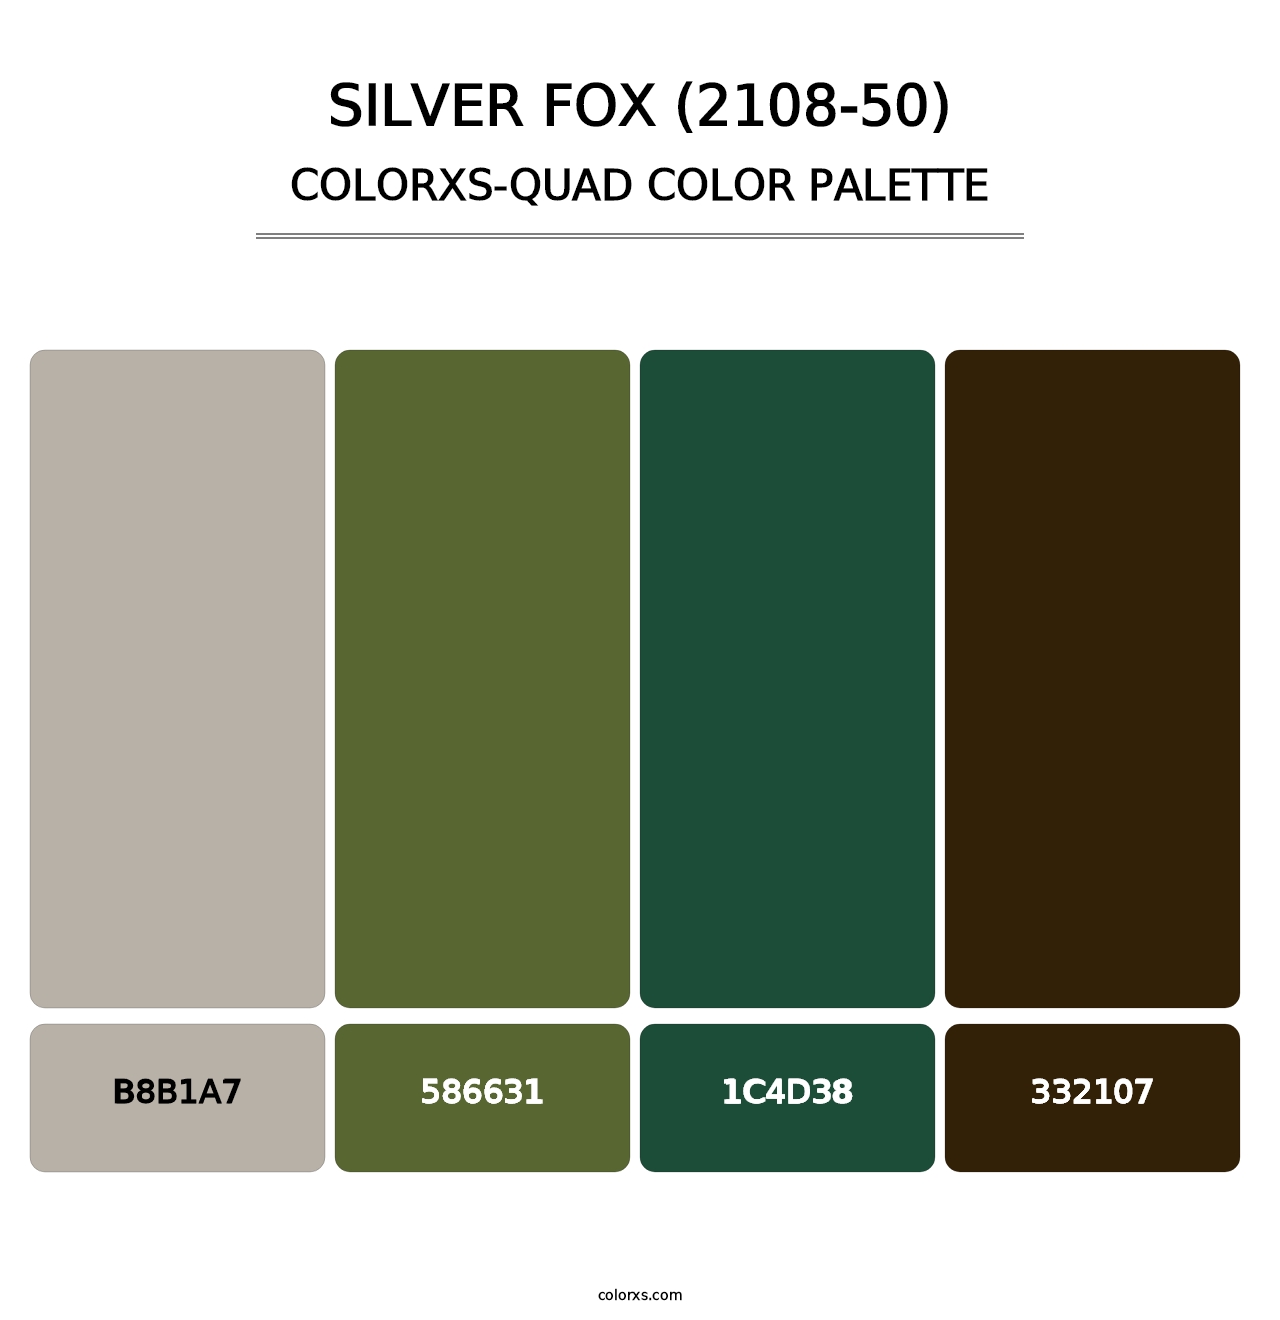 Silver Fox (2108-50) - Colorxs Quad Palette